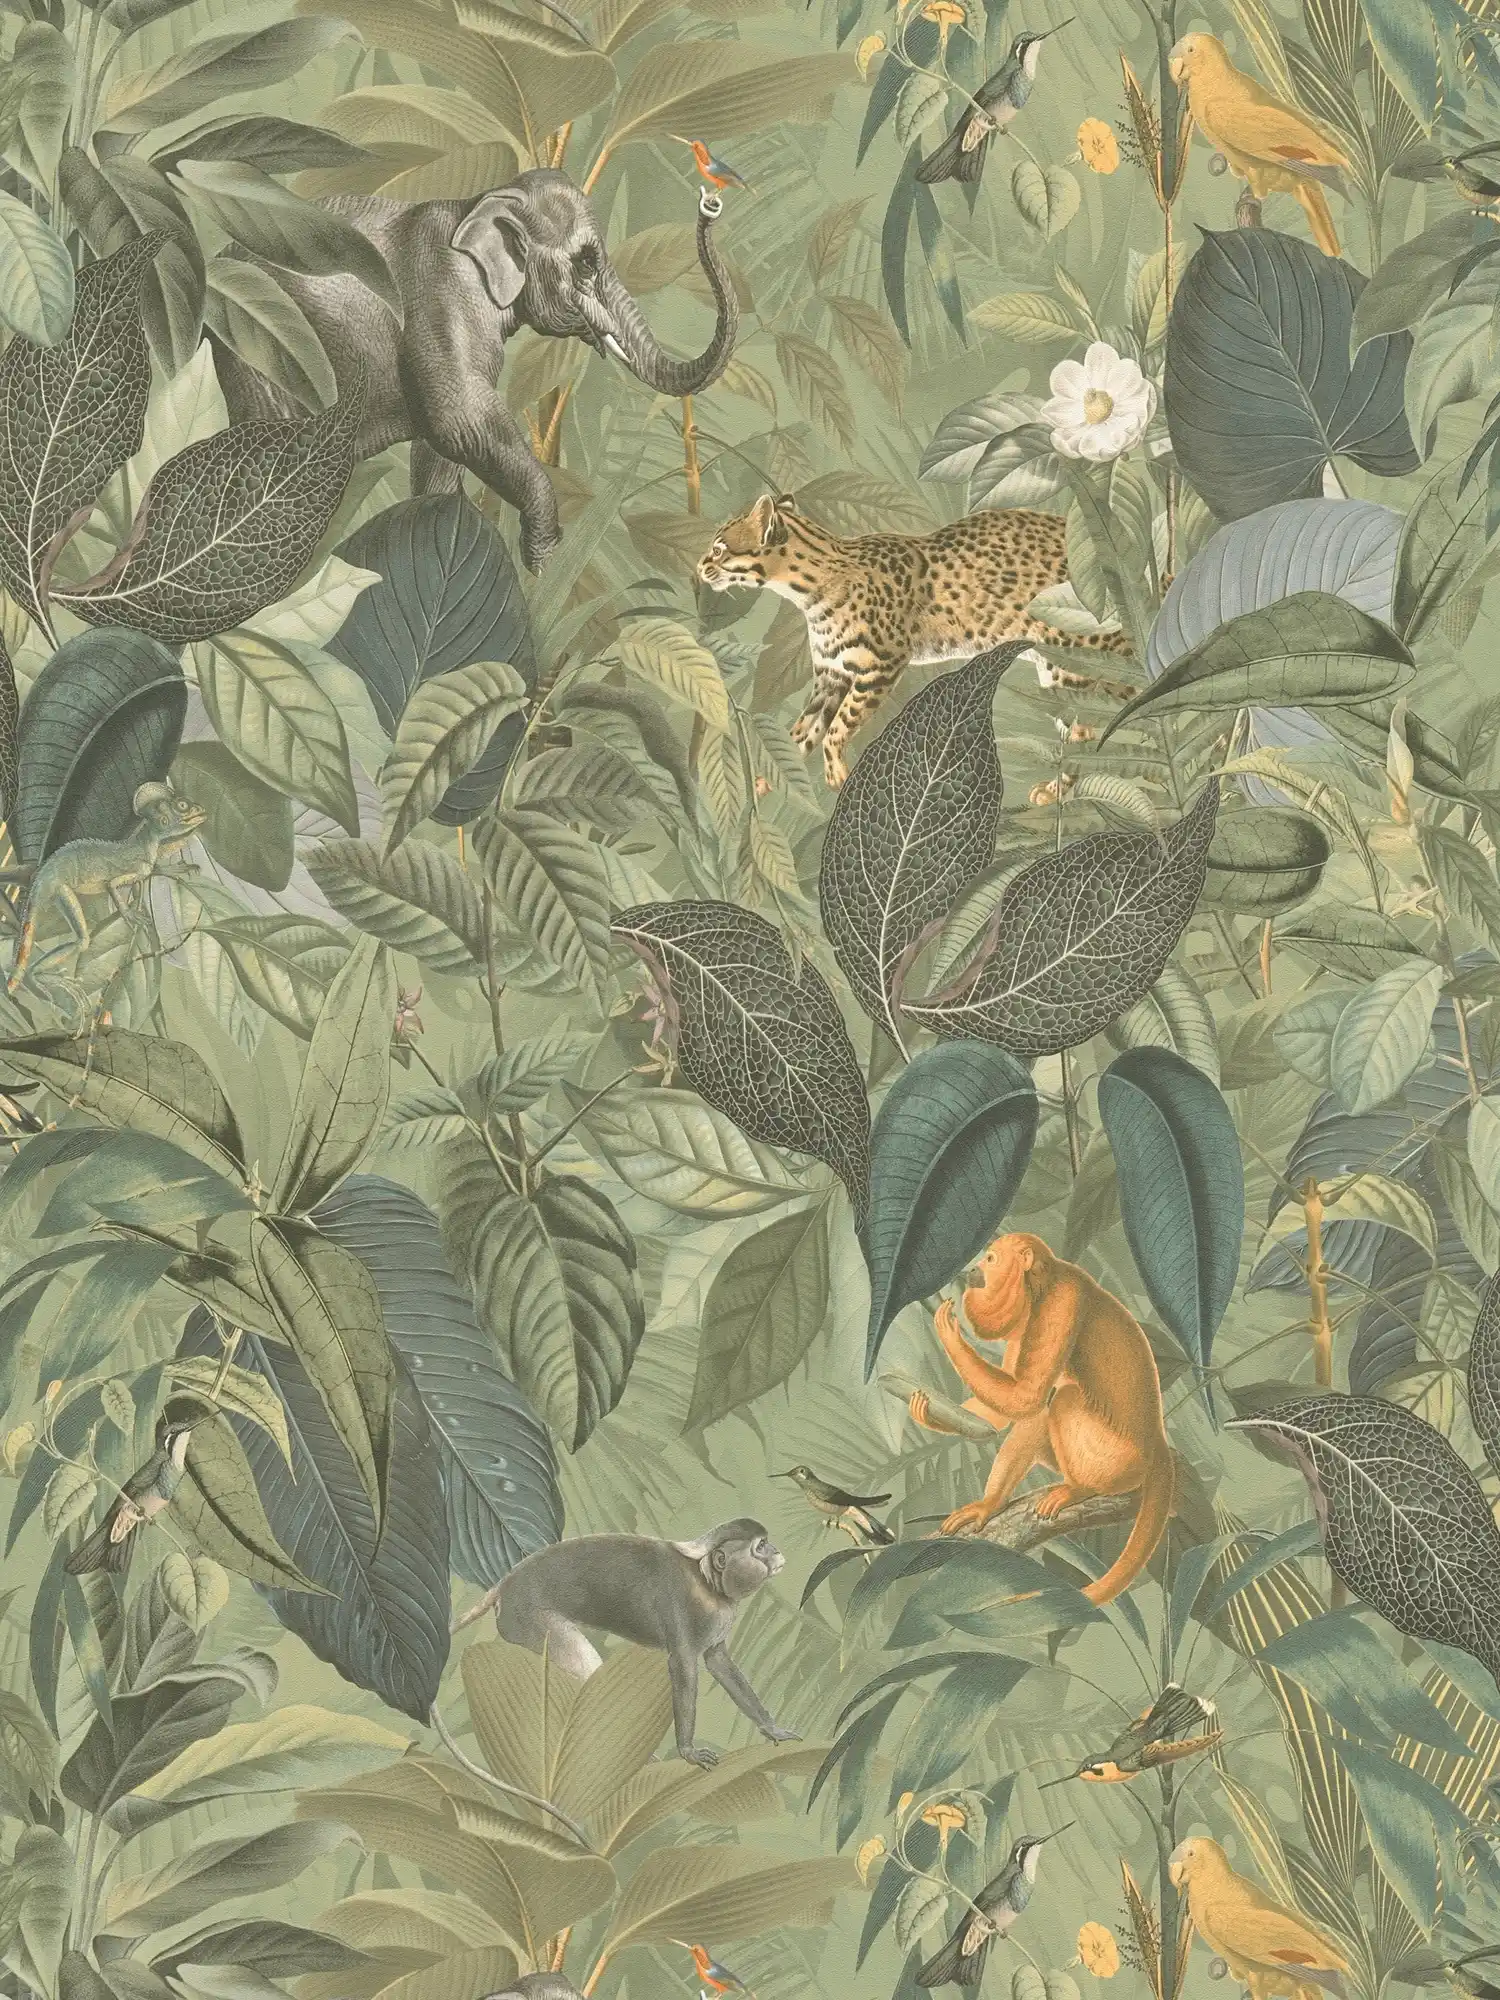 Jungle wallpaper with animals, children motif - grey, green
